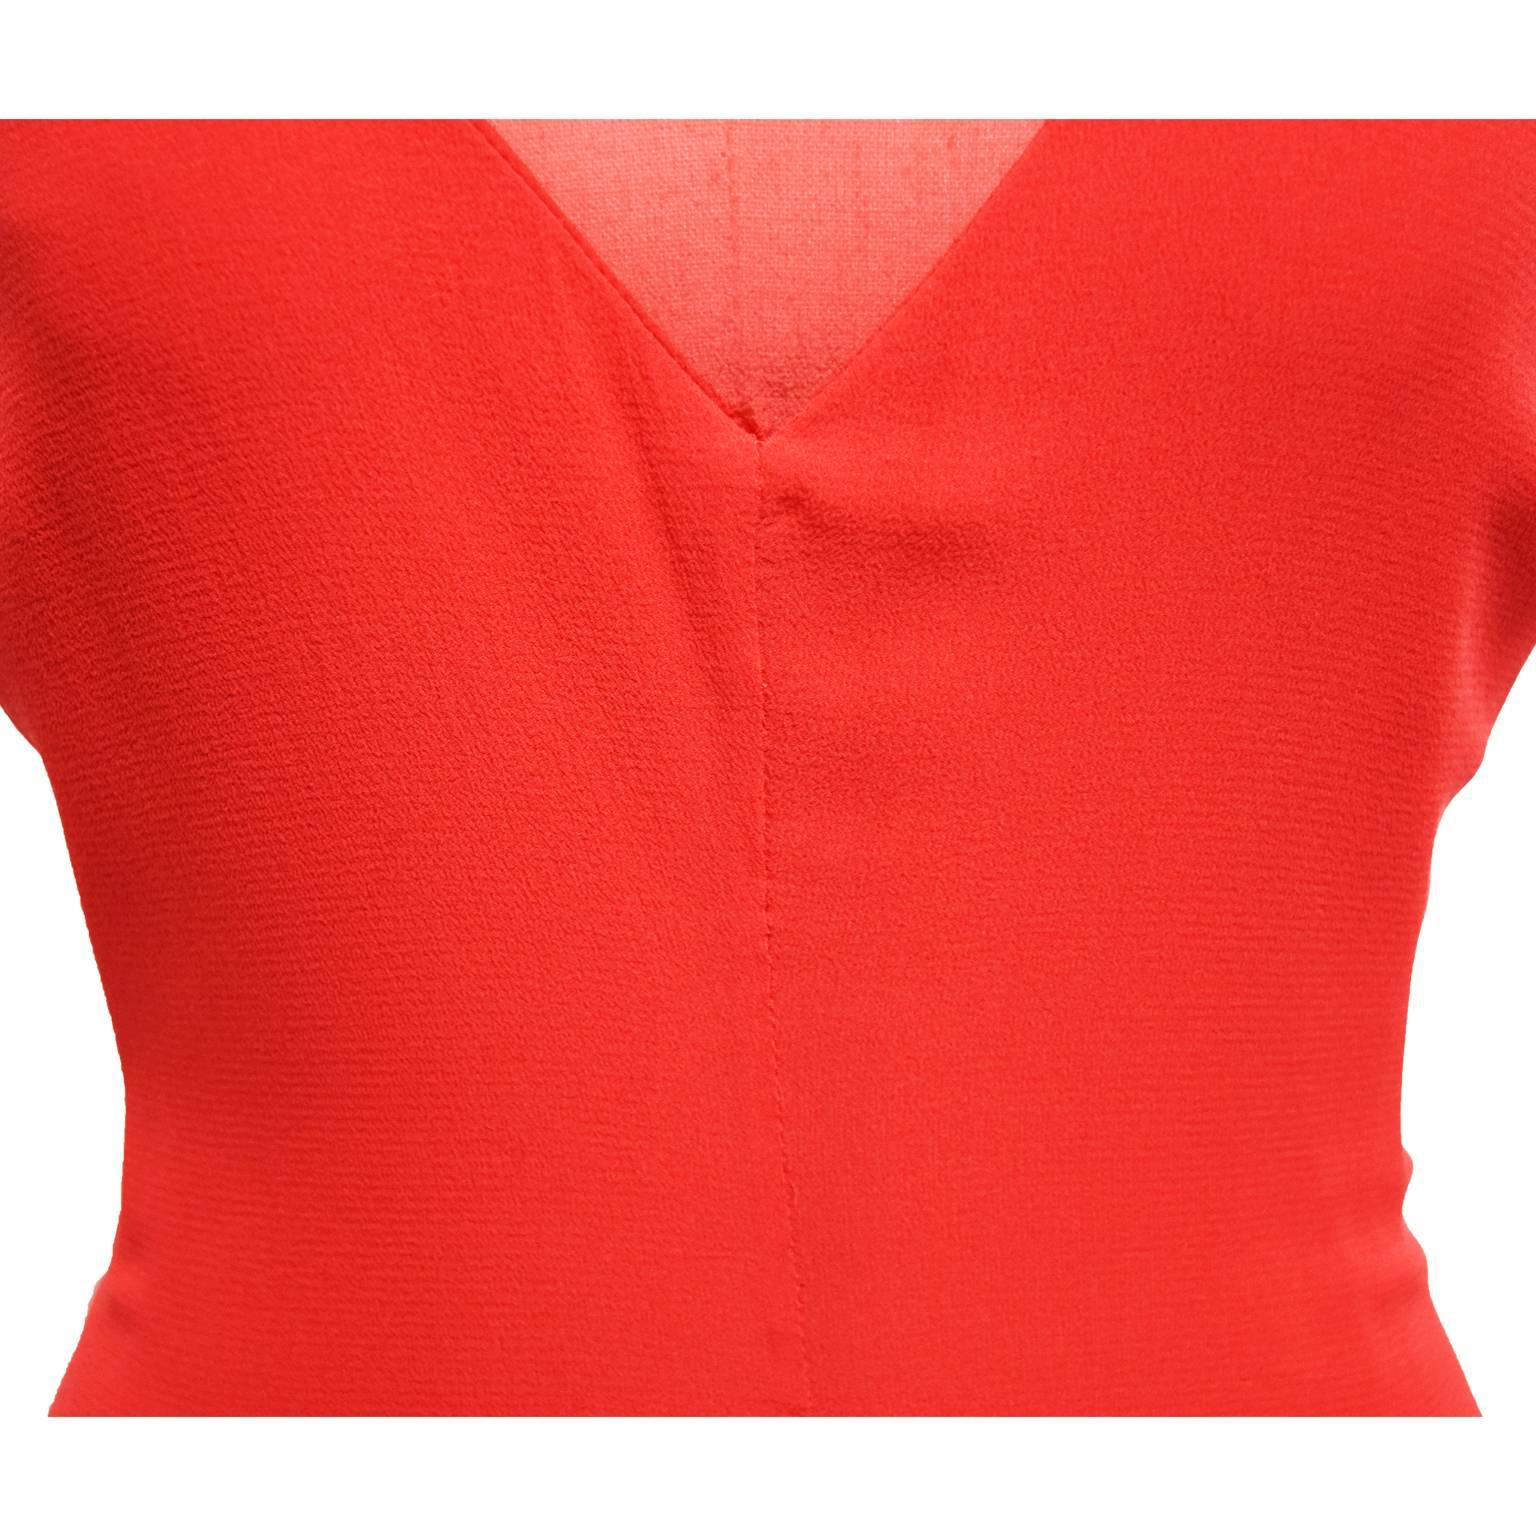 Giorgio Armani Red Sheer Sheath Dress For Sale 2